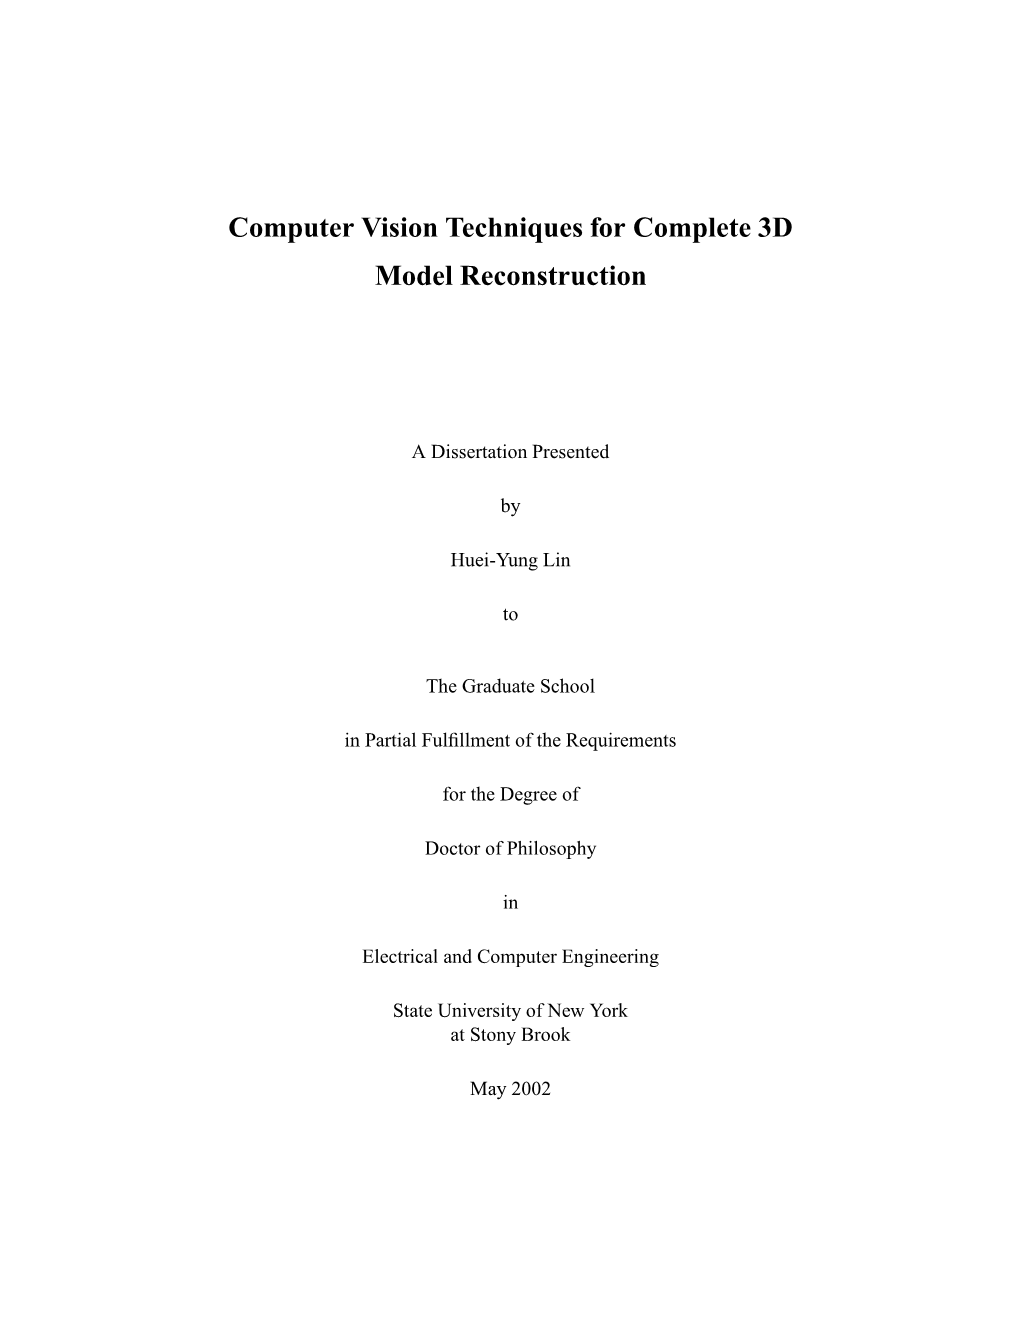 Computer Vision Techniques for Complete 3D Model Reconstruction